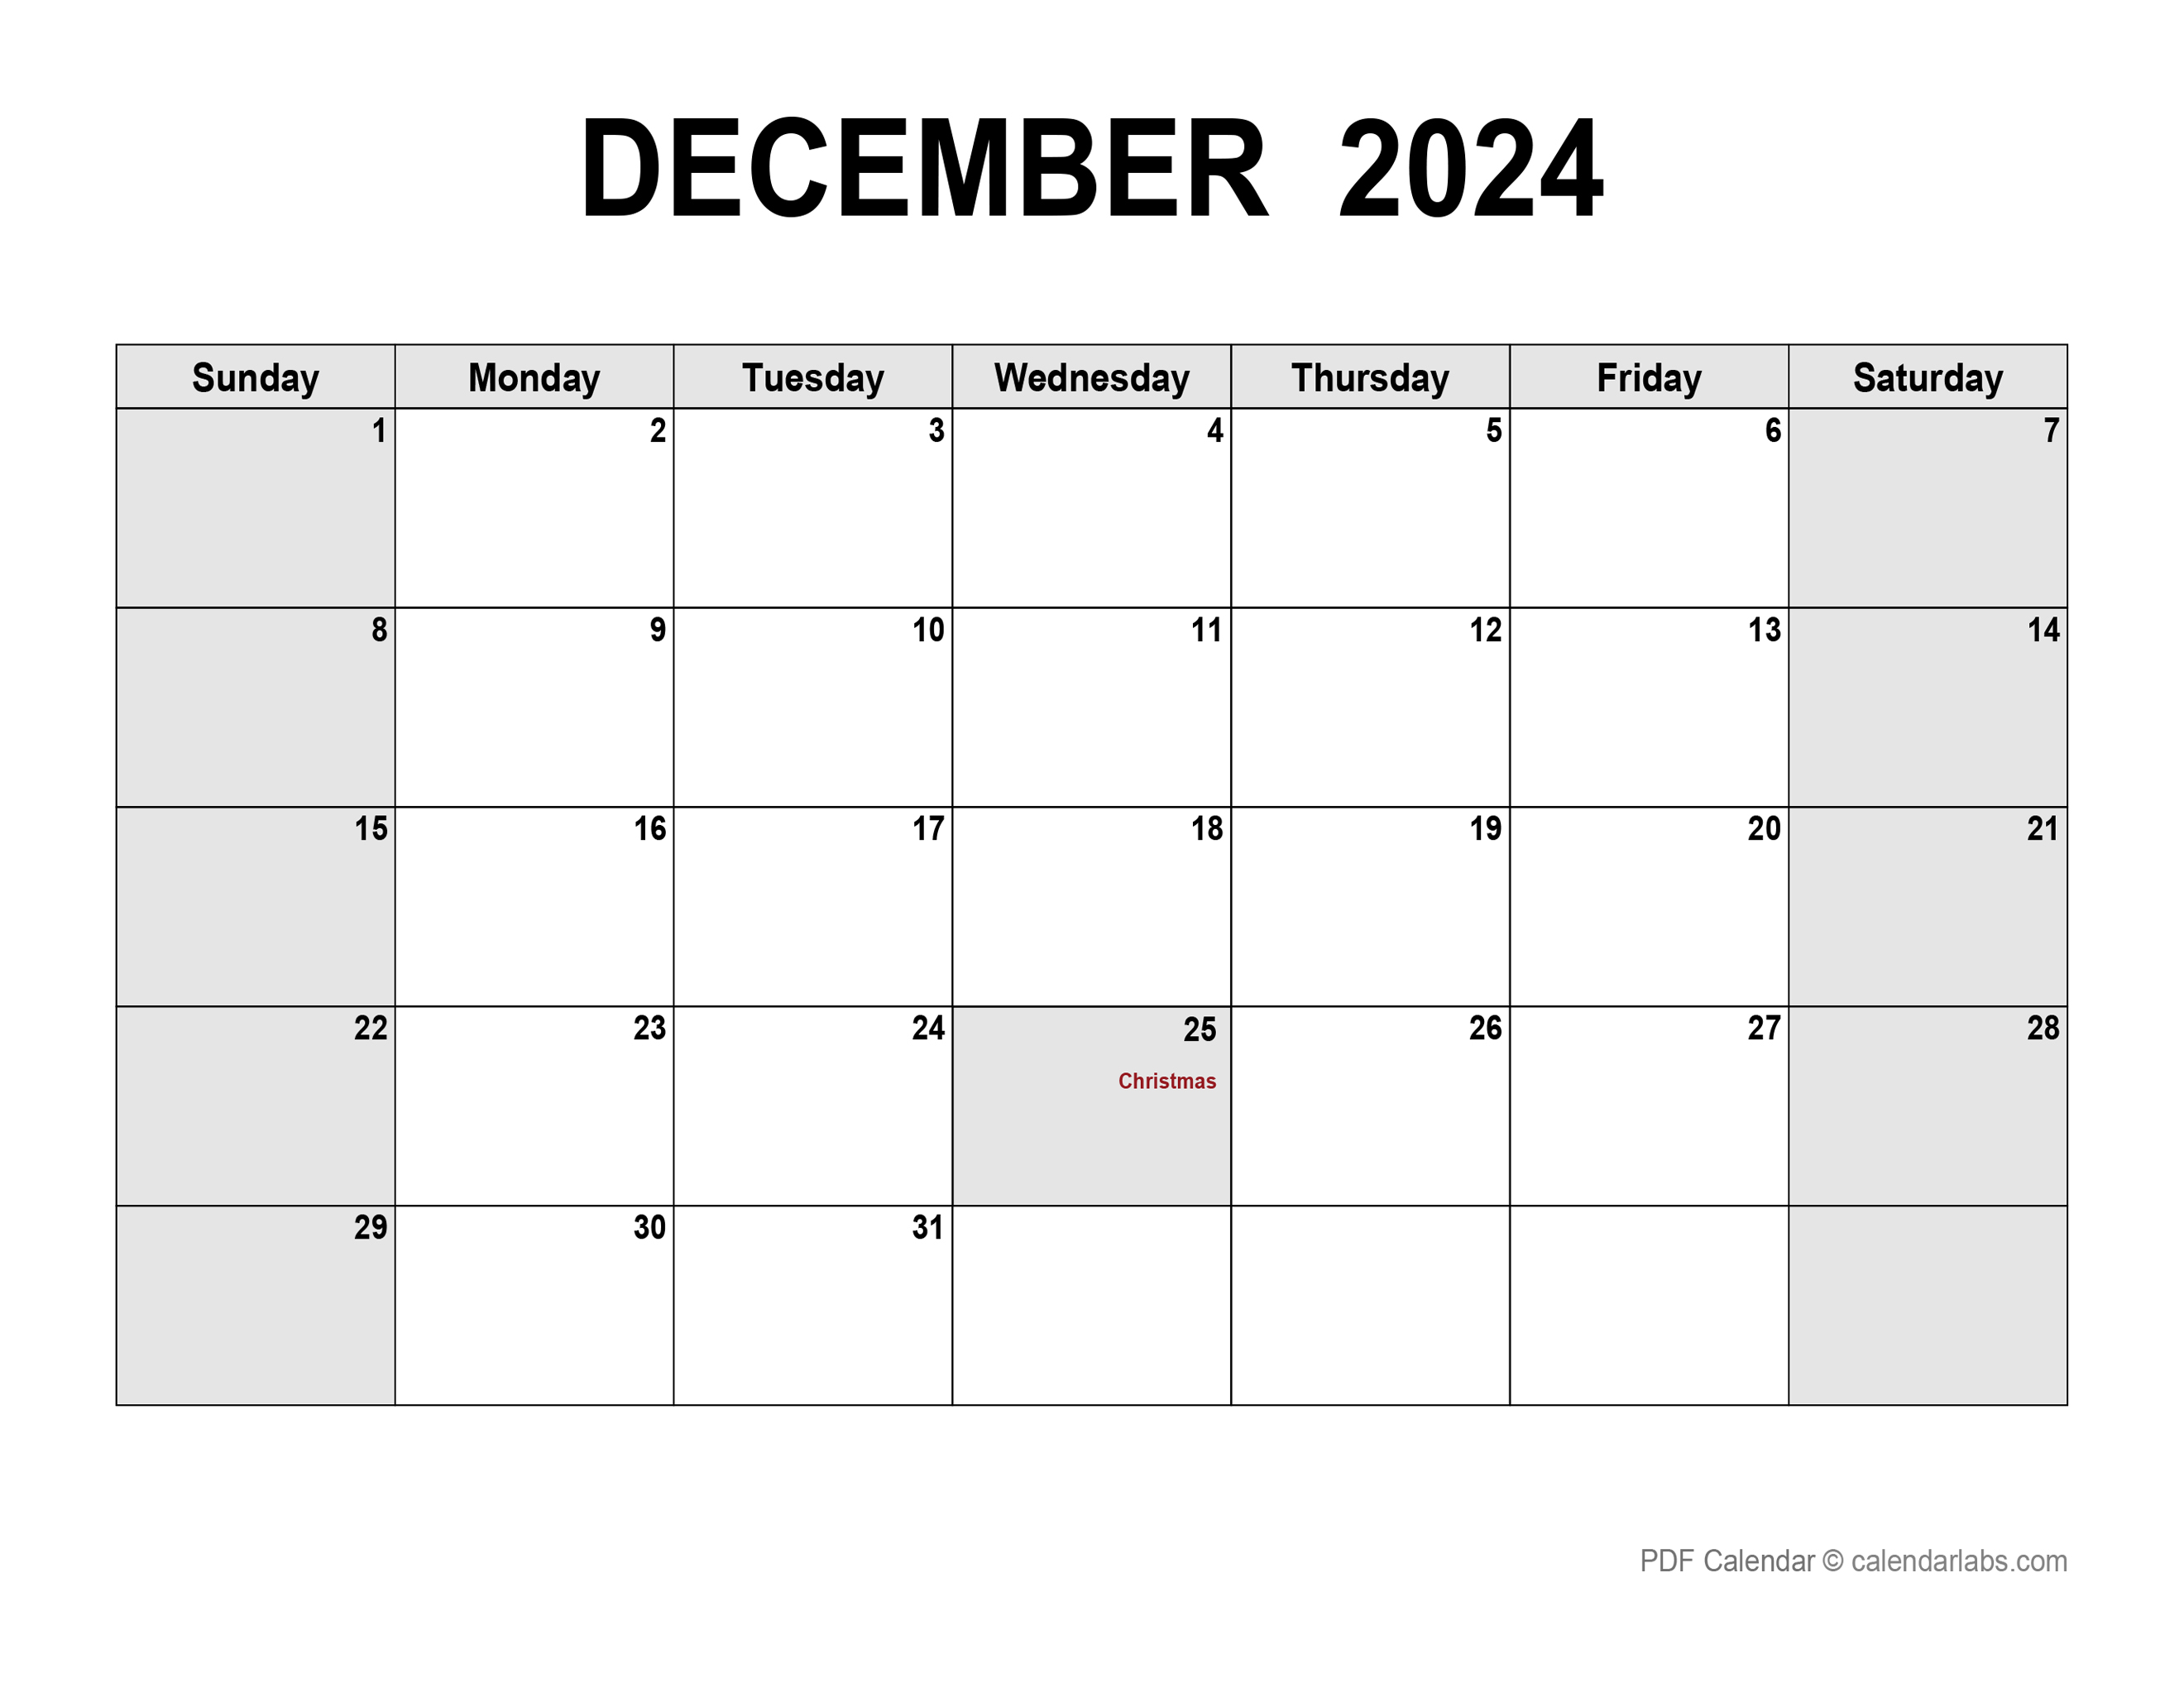 December 2024 Calendar with Holidays CalendarLabs